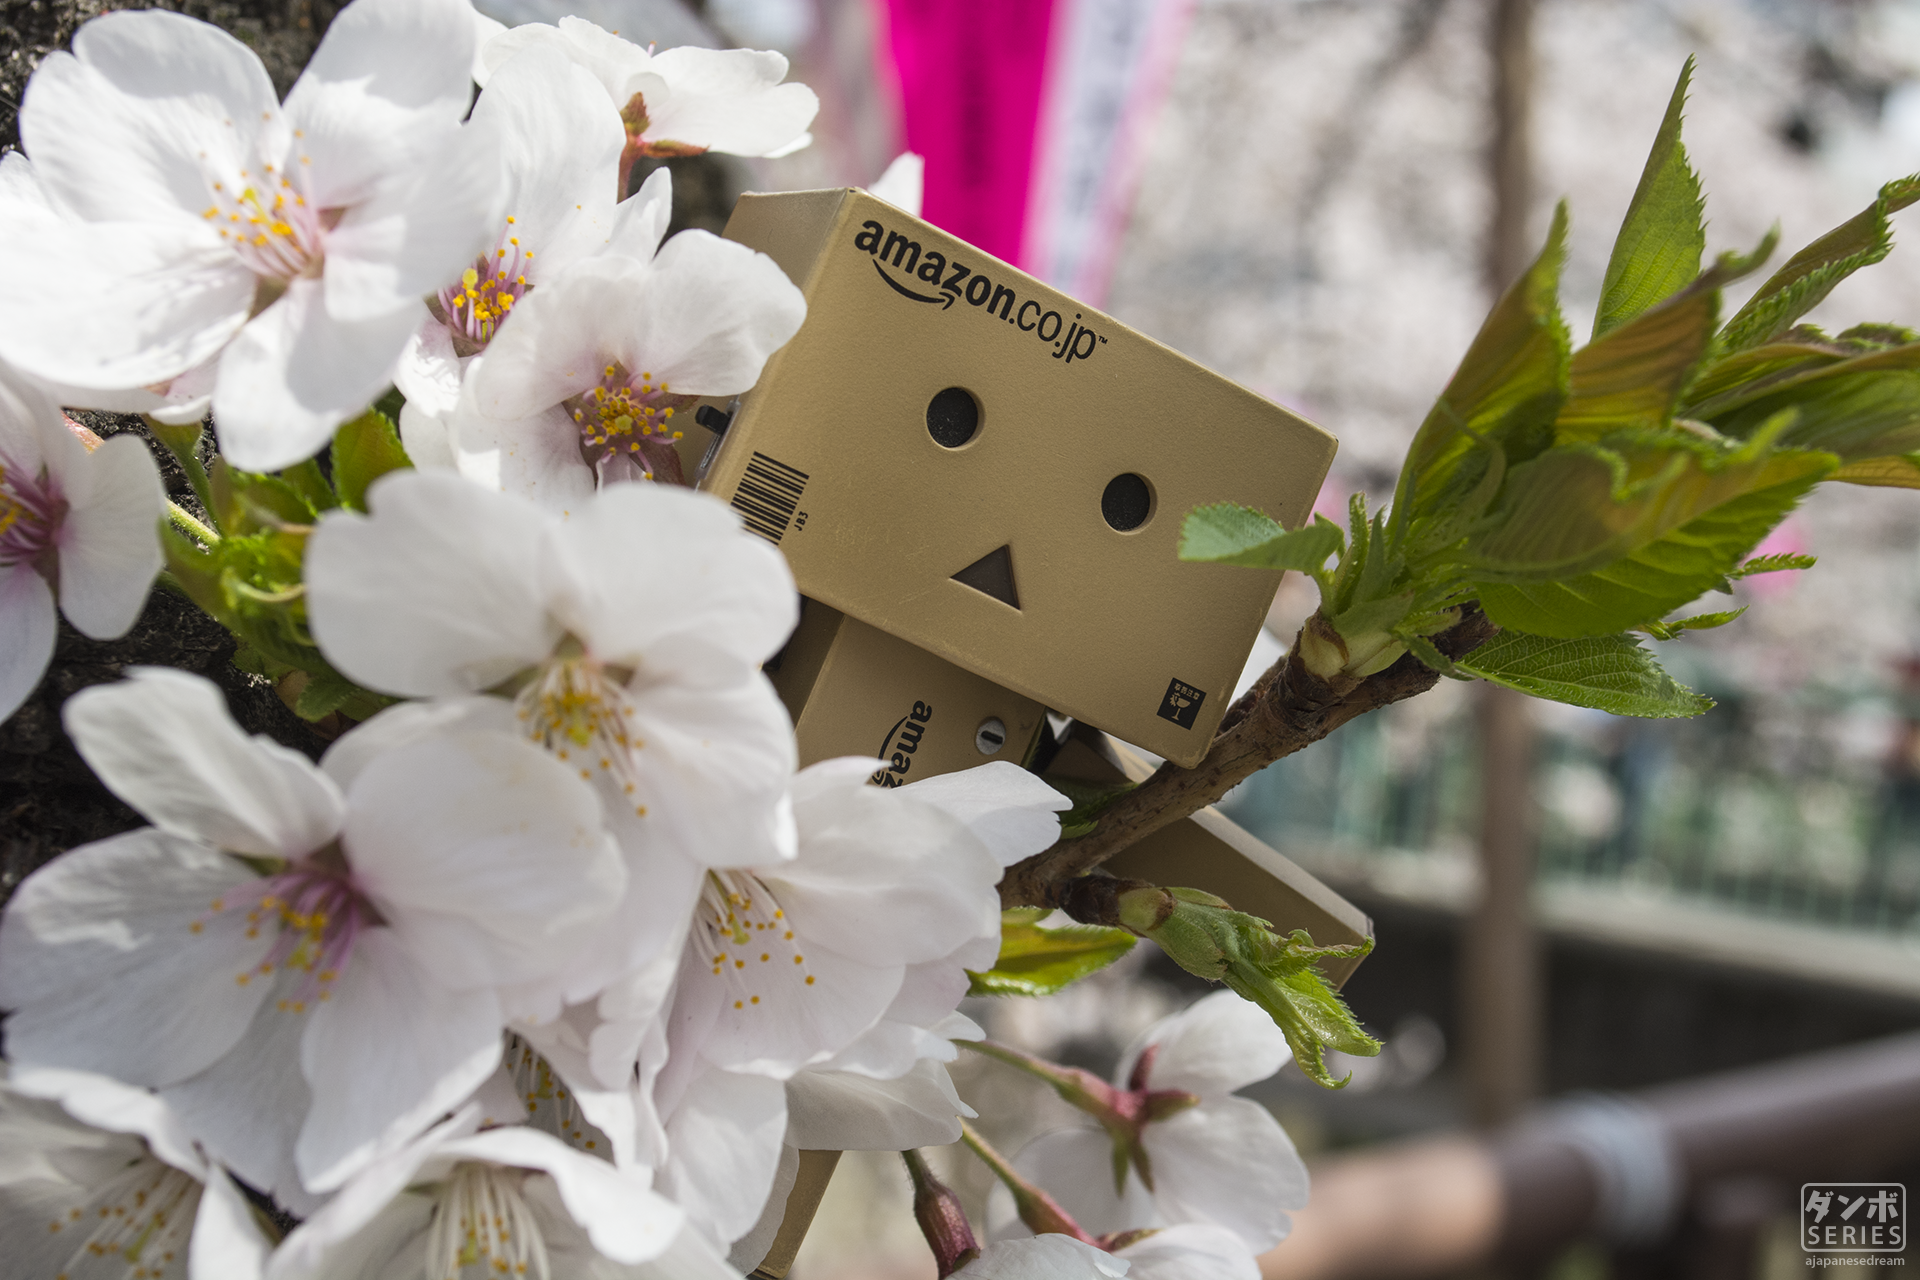 General 1920x1280 Danbo Amazon cherry blossom spring Japan carton box flowers plants